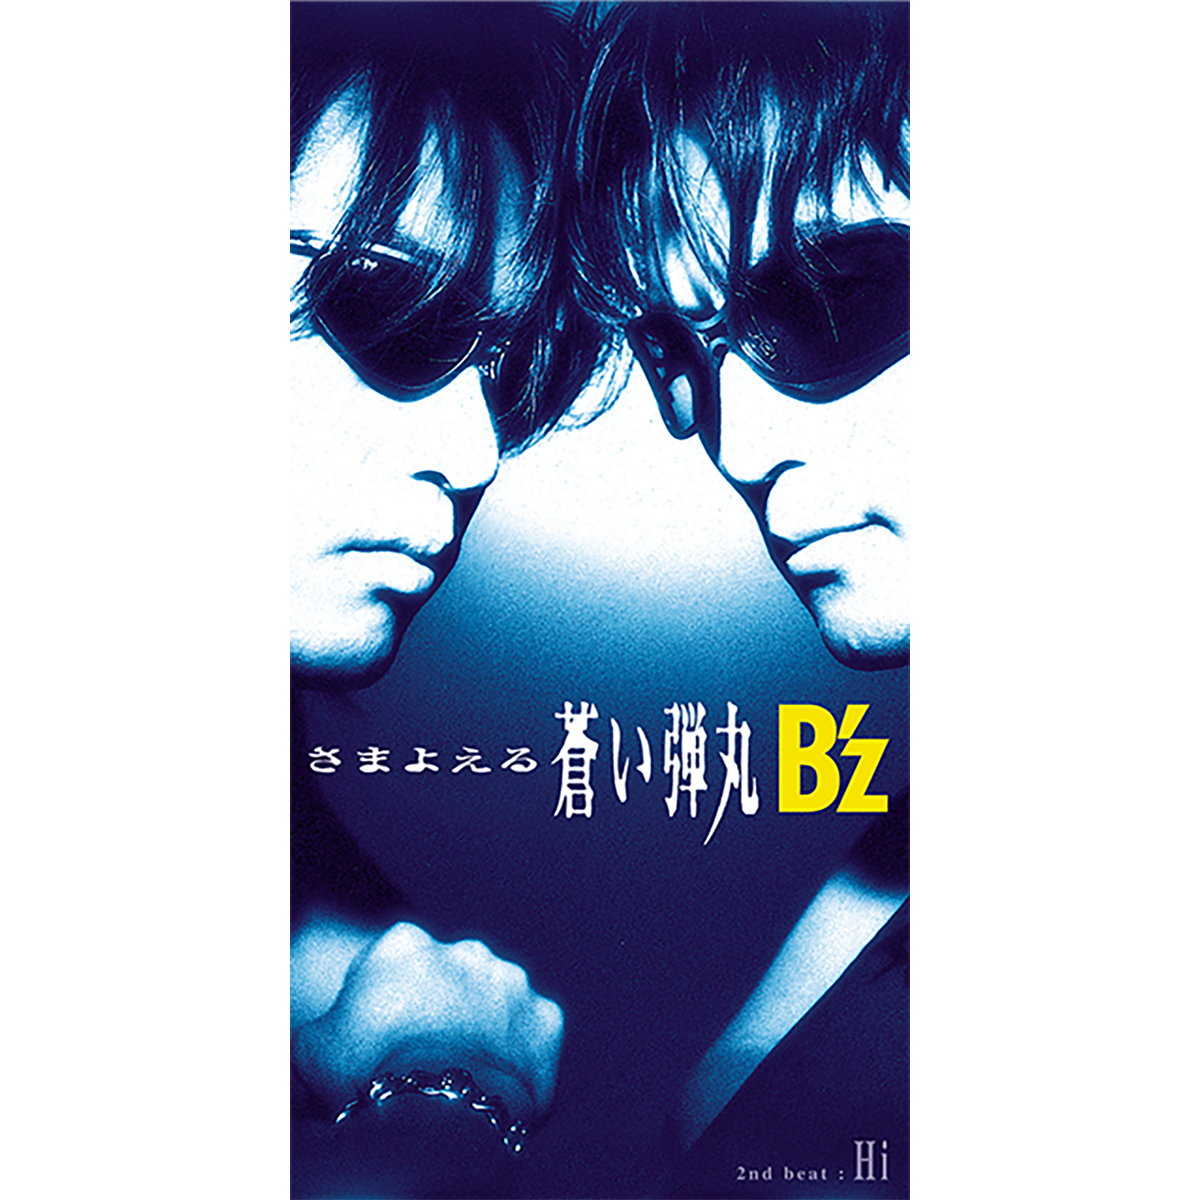 B'z 24th Single「さまよえる蒼い弾丸」のジャケット画像